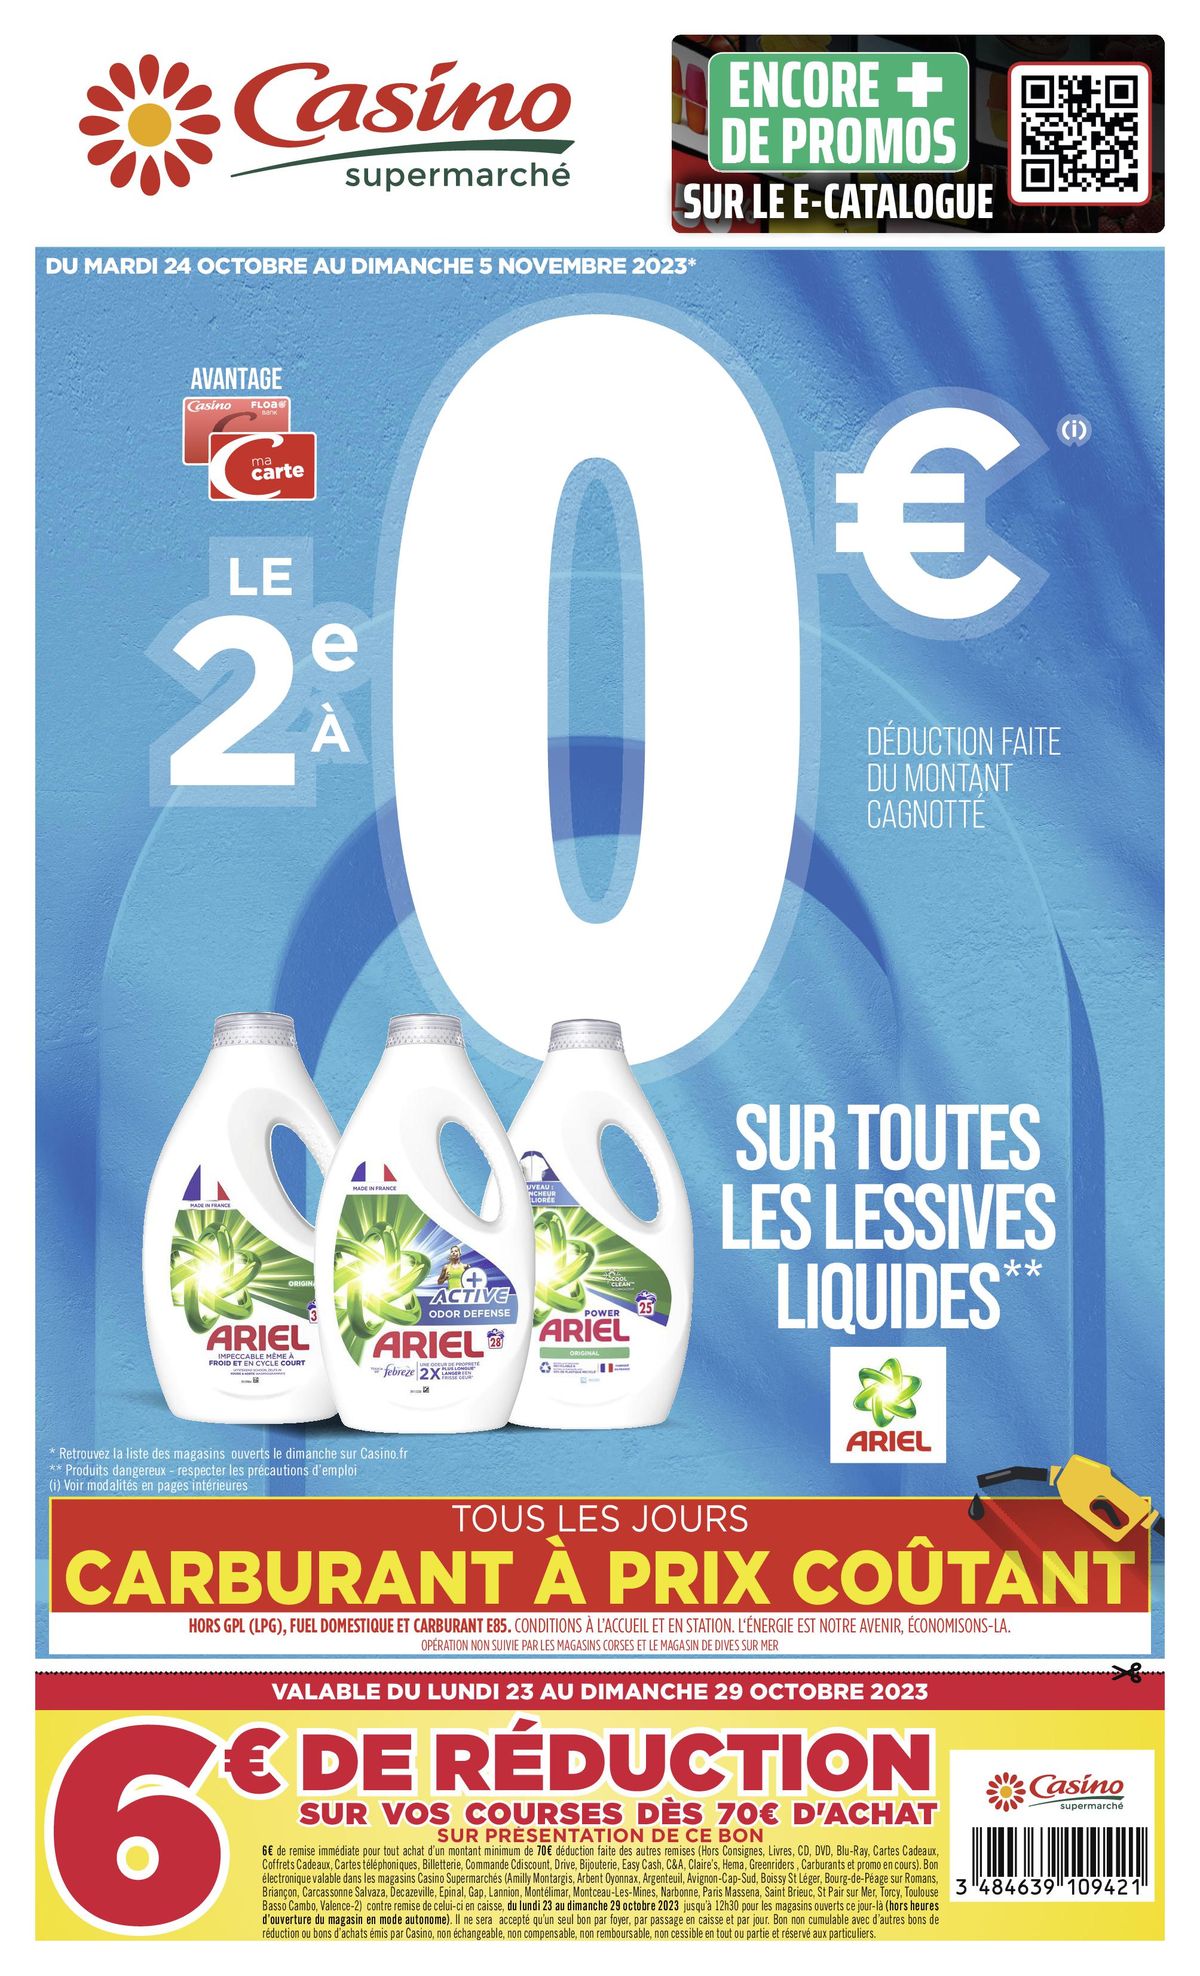 Catalogue Casino supermarché, page 00001